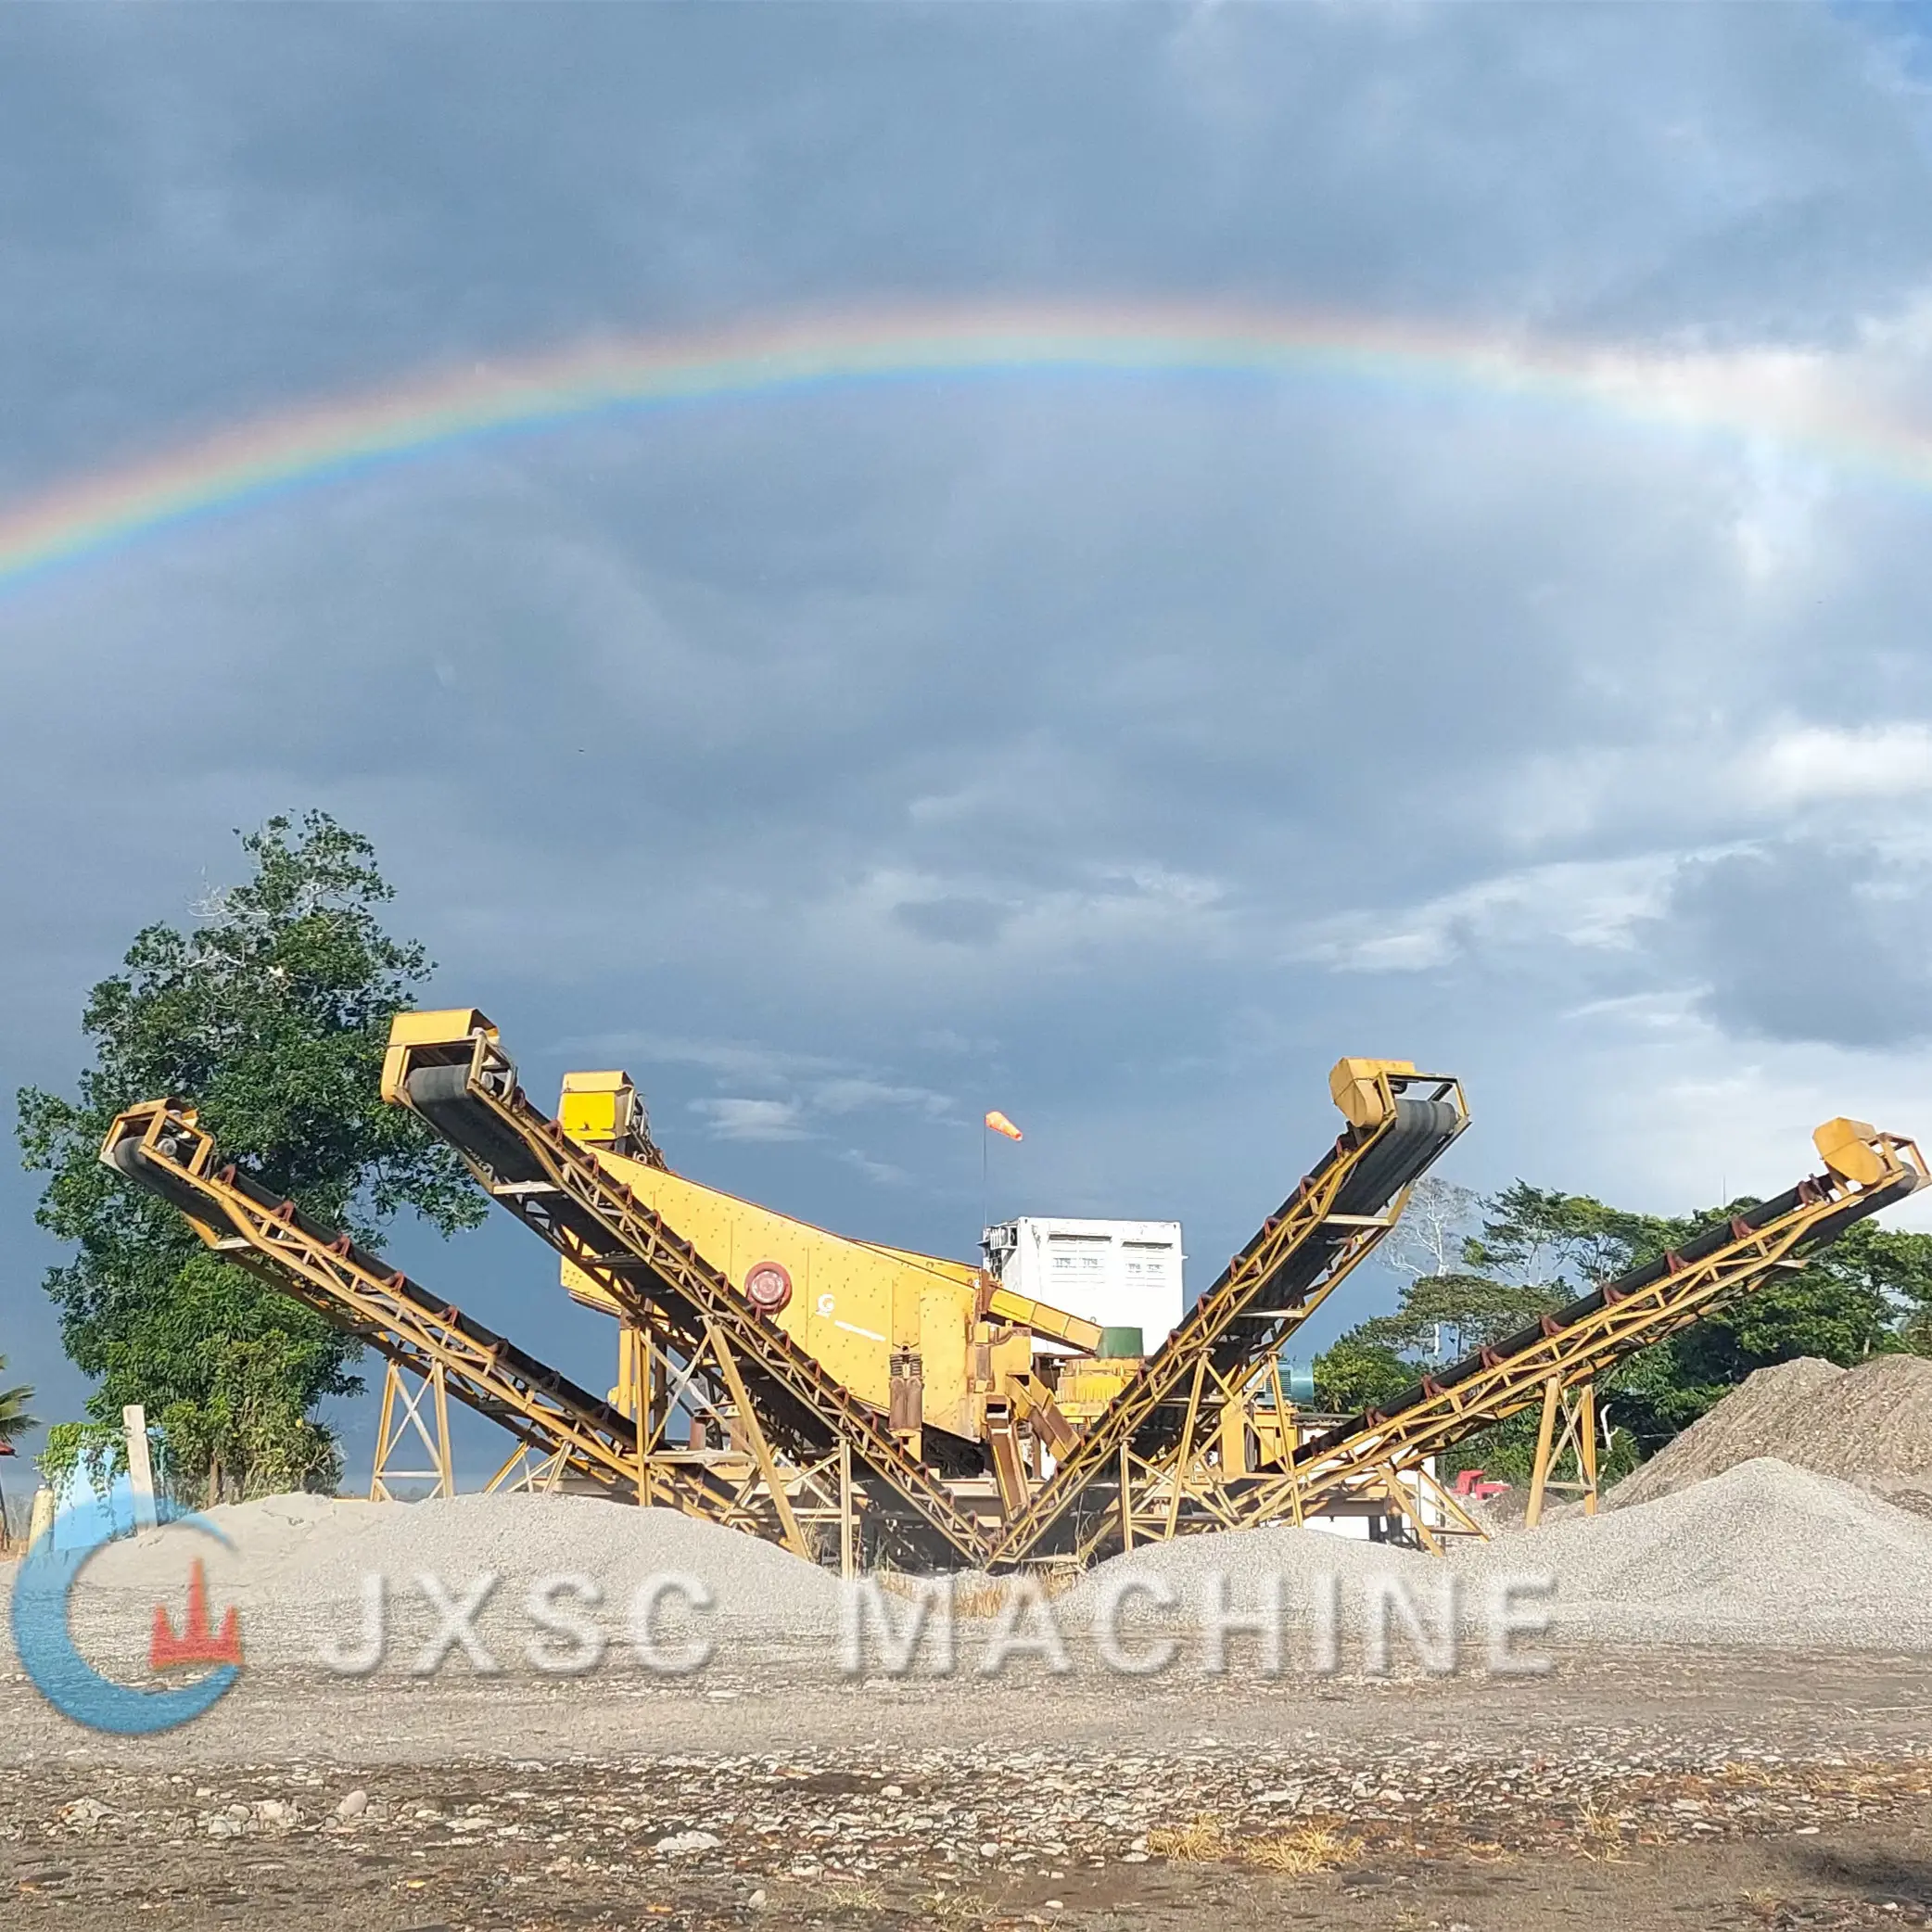 100 Tph Jaw Rock Crushing Machine Price Quarry Stone Crusher Crushing Plant Batu Used Stone Crusher Plant for Sale